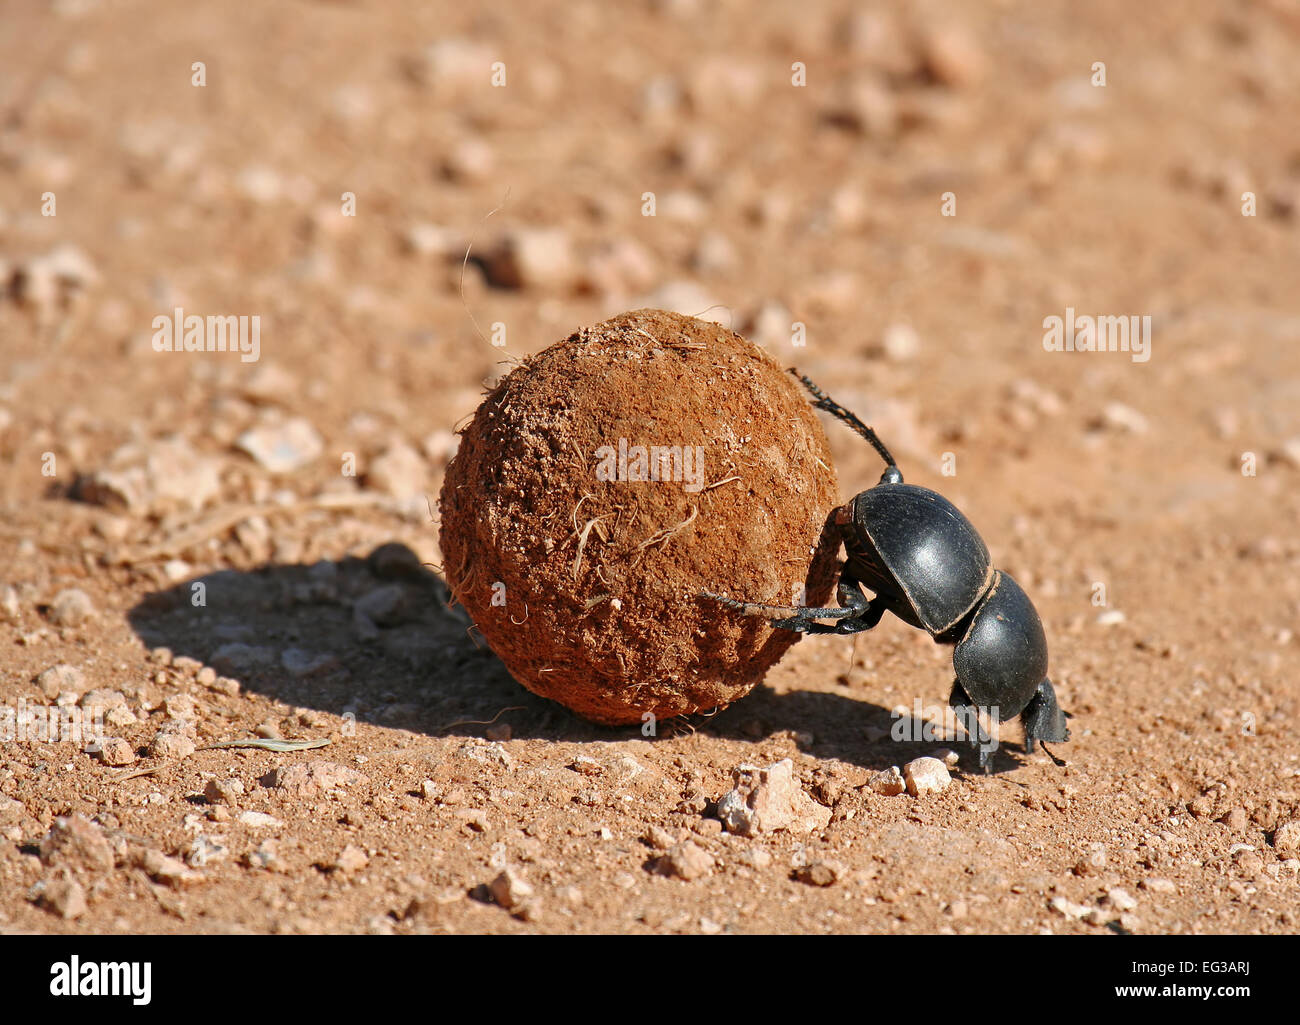 Dung beetle, south africa, Scarabaeus sacer Stock Photo